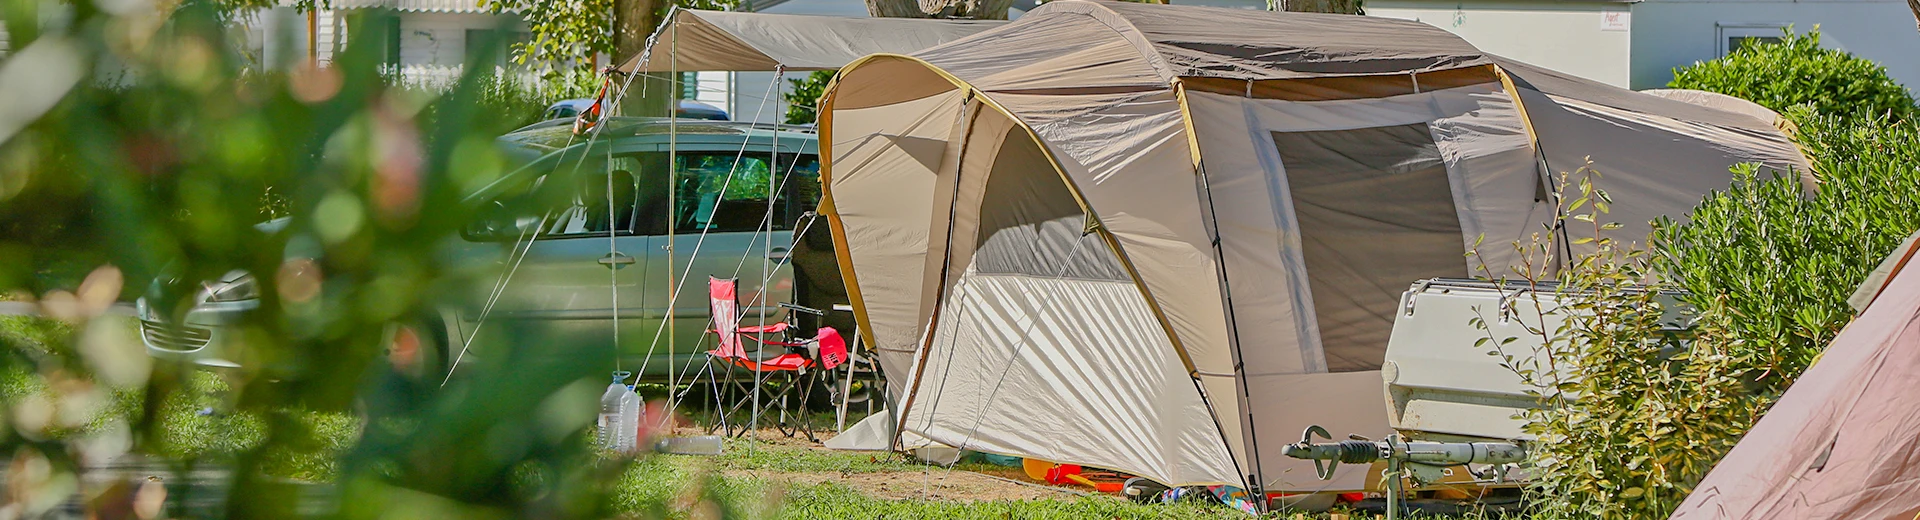 rent a tent caravan site in toulouse